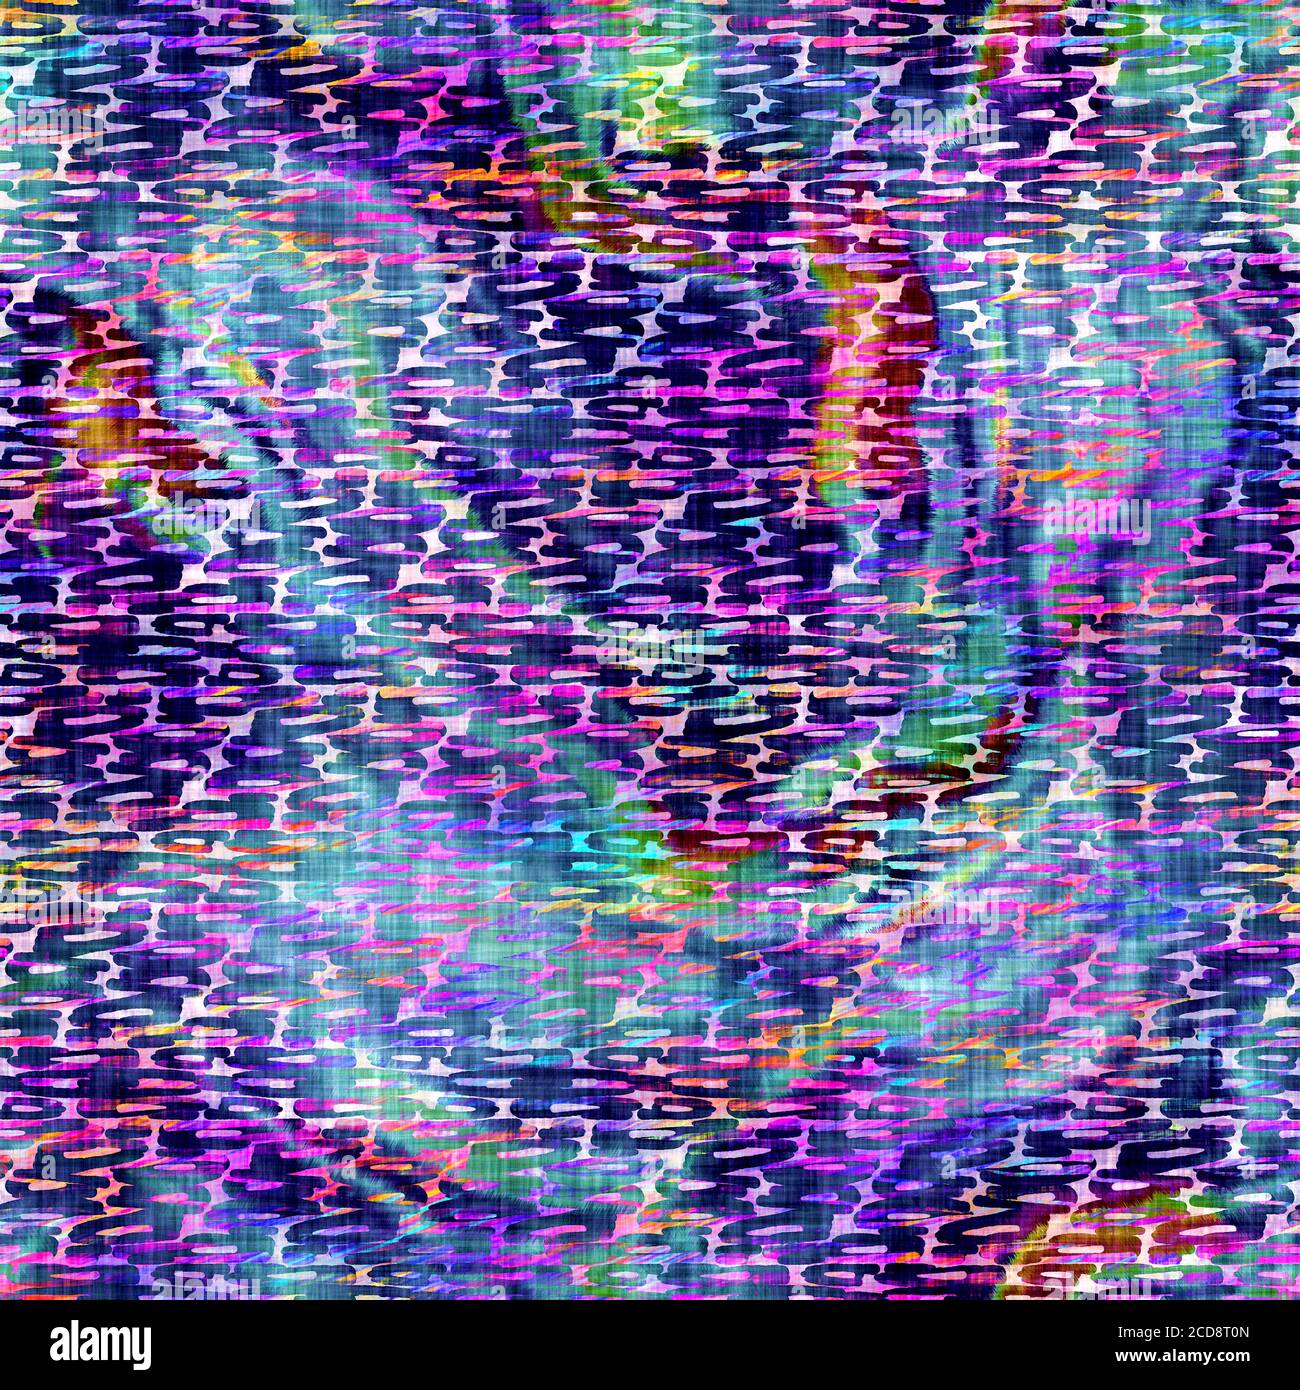 Blurry rainbow glitch camo texture background. Irregular bleeding